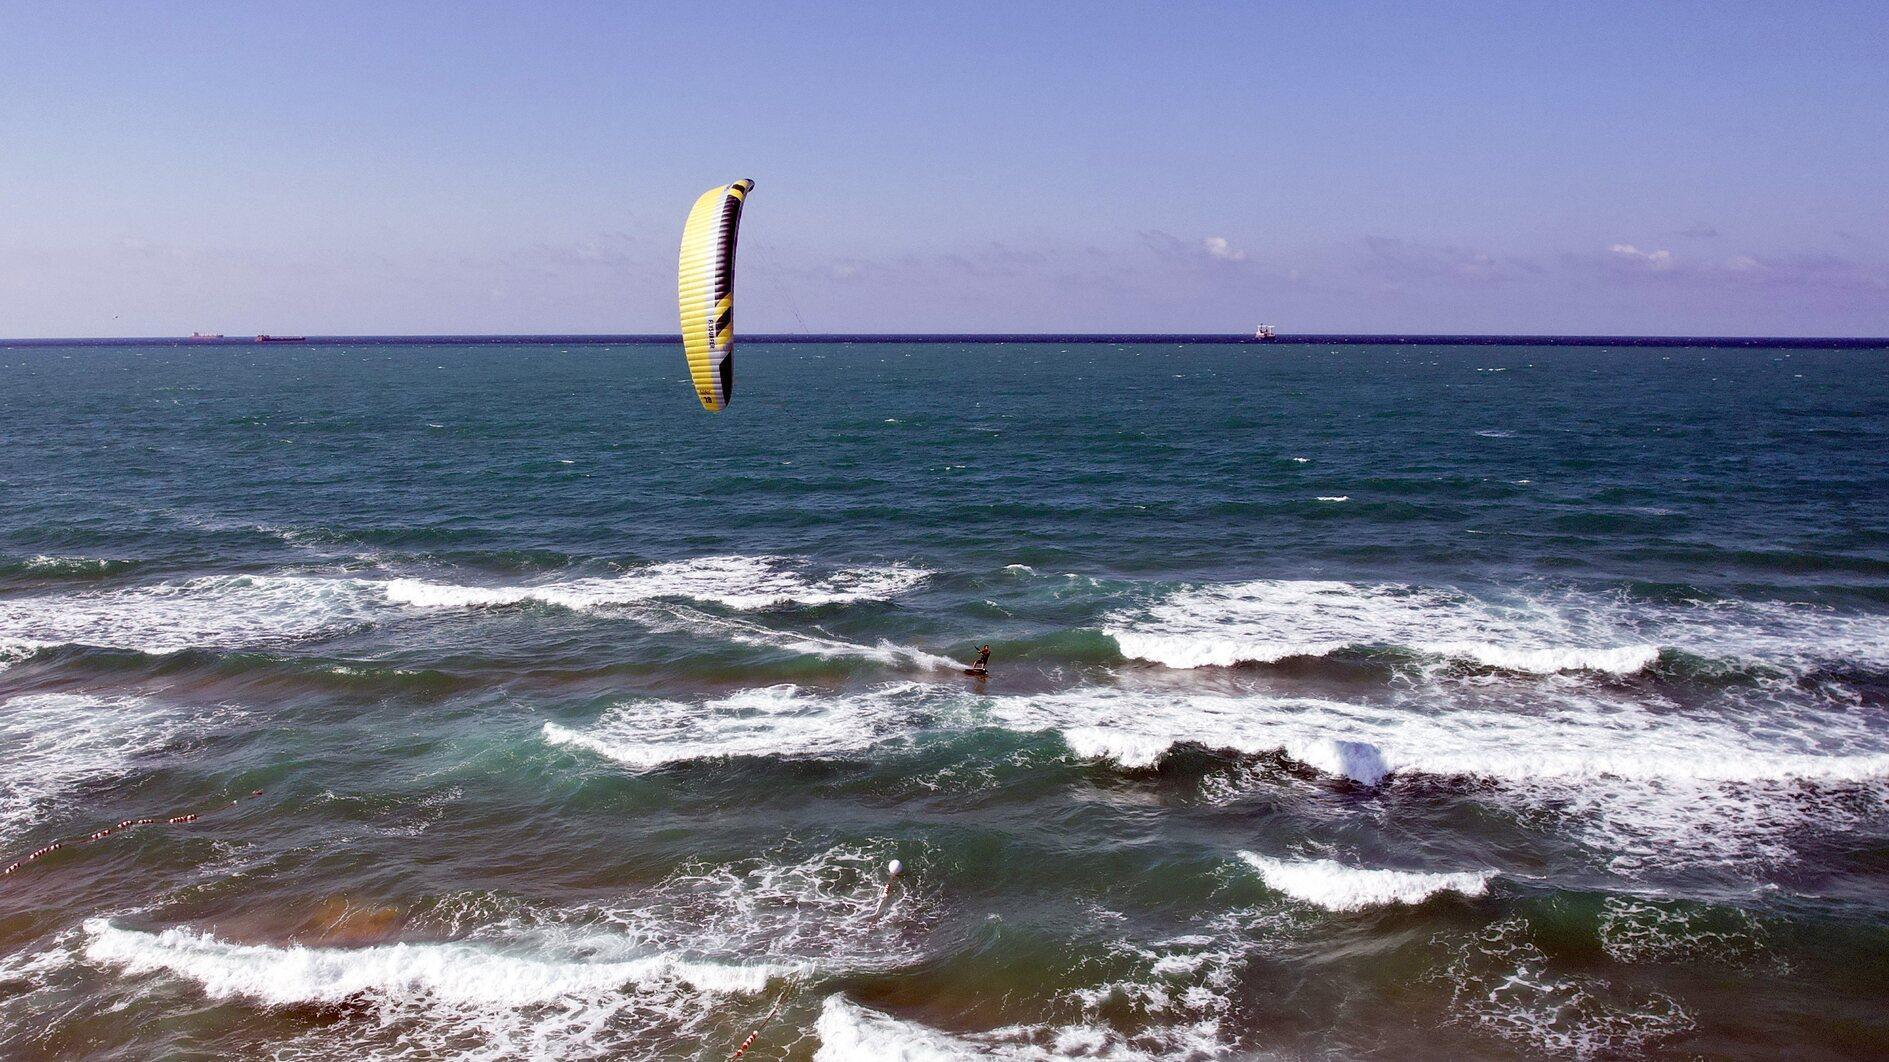 Kilyos shores emerge as premier spot for kitesurfers